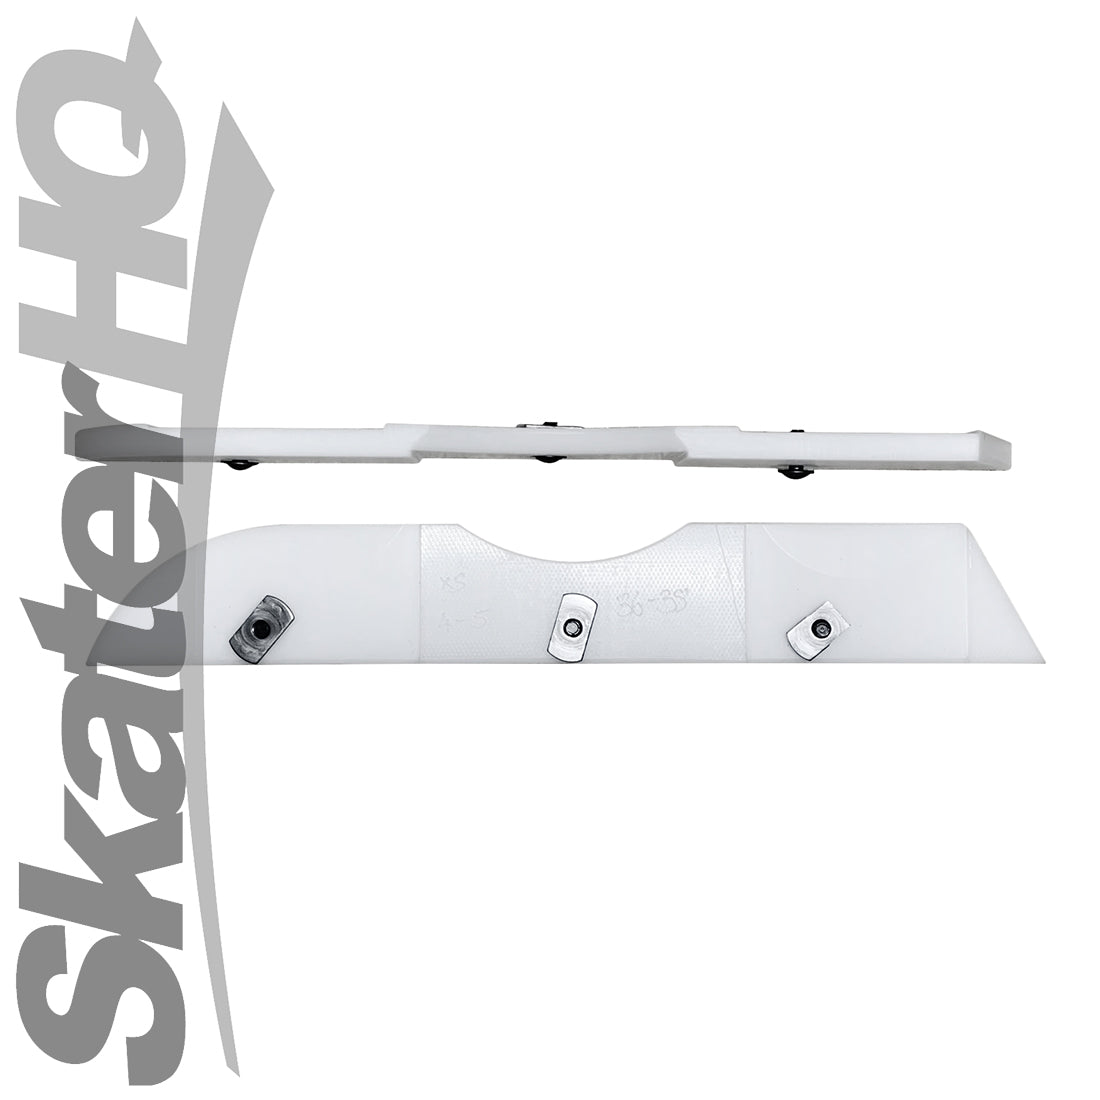 Sliqx Aeon Soul Plate Sliders - EU43-44 - White Inline Hardware and Parts